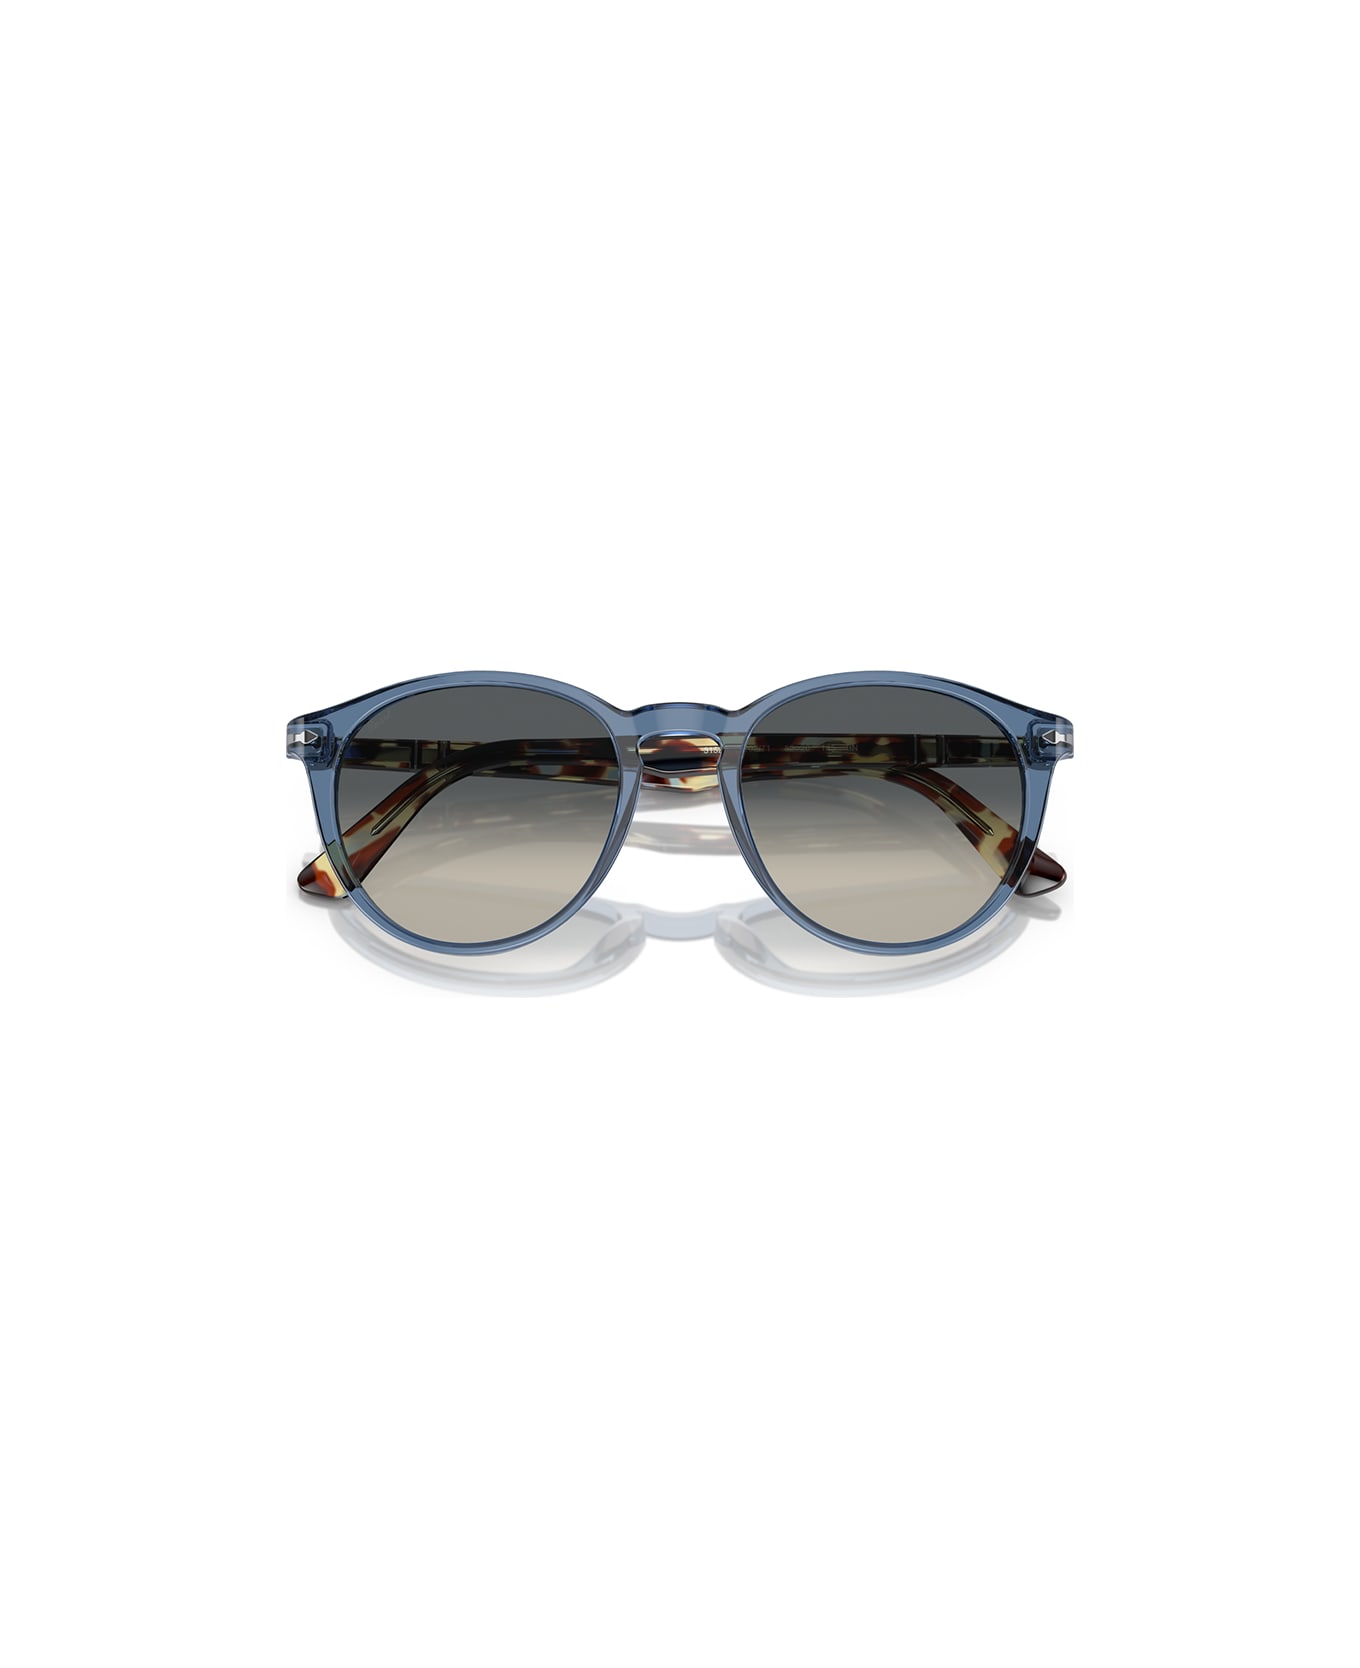 Persol Eyewear - Blu navy/Grigio sfumato